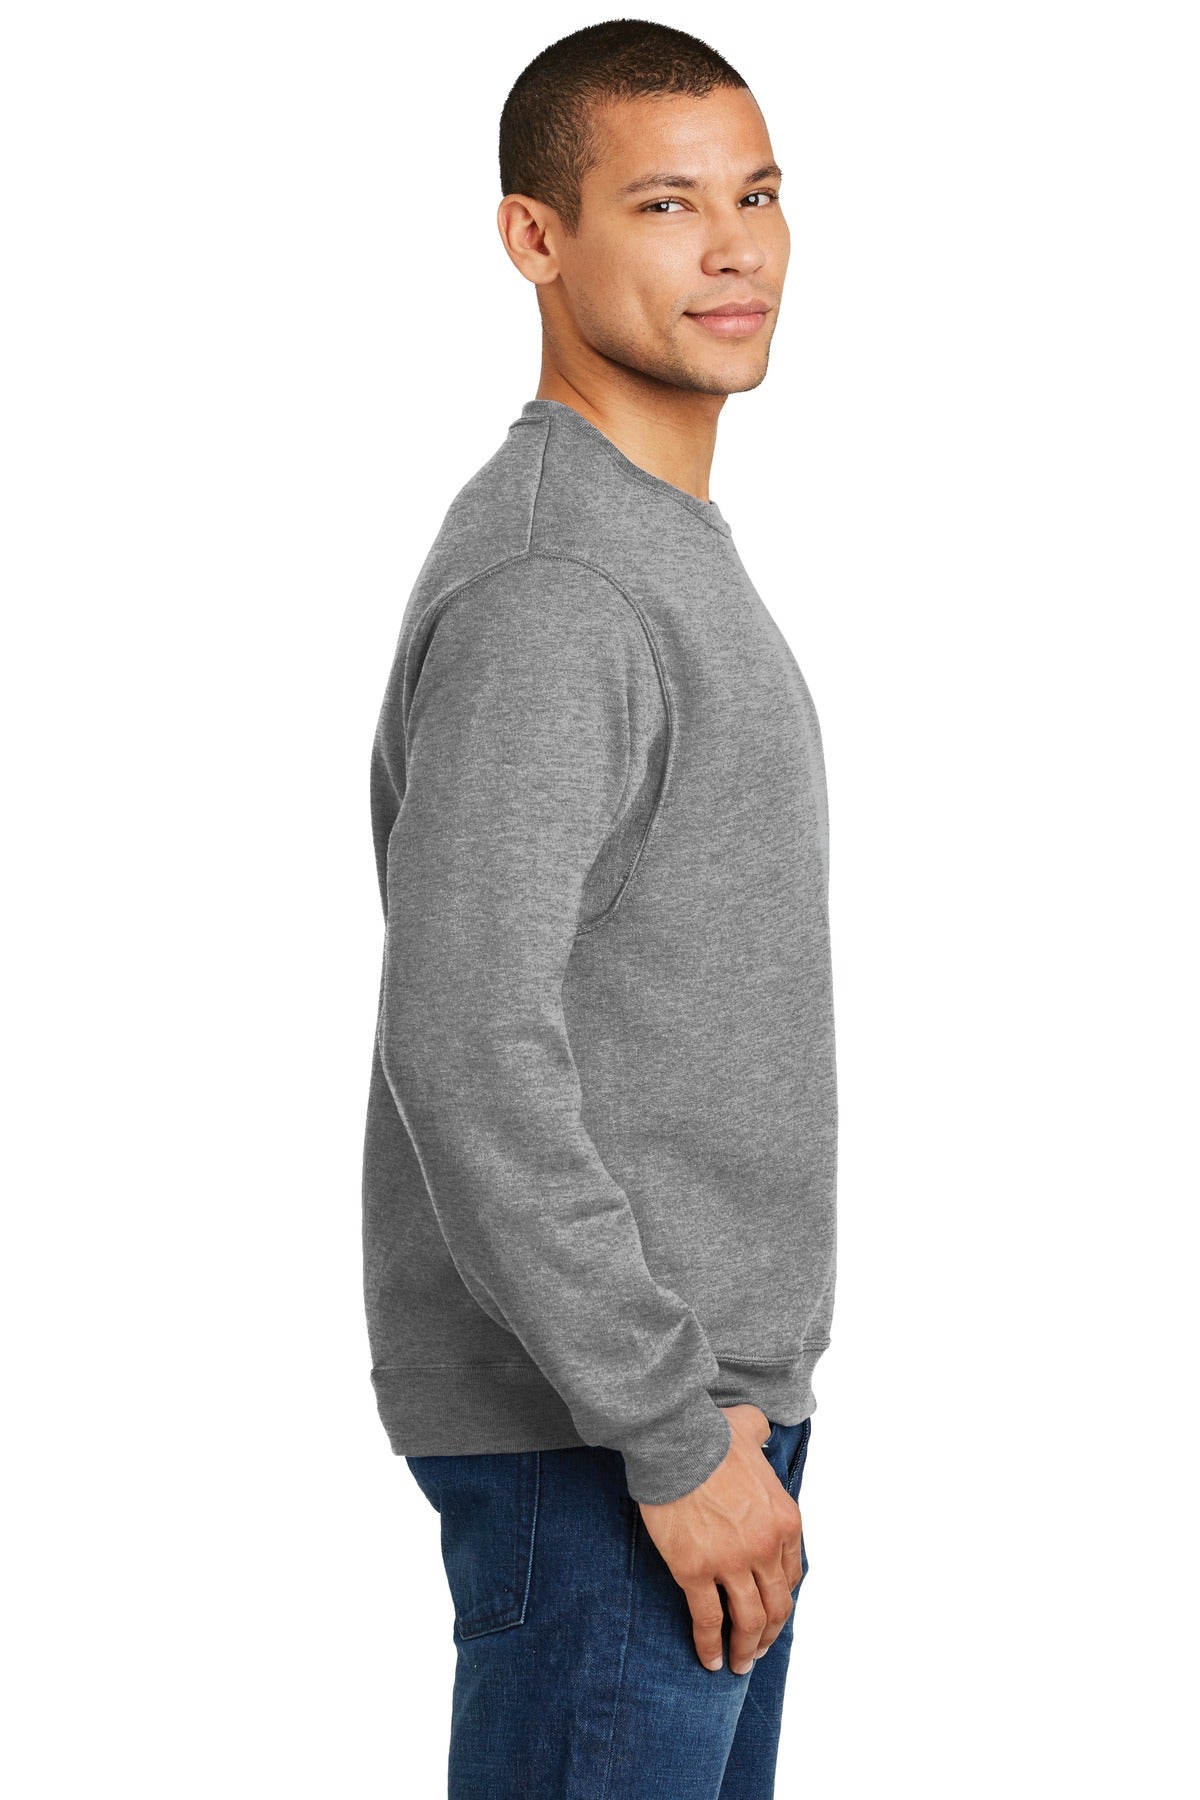 JERZEES® - NuBlend® Crewneck Sweatshirt. 562M [Oxford] - DFW Impression